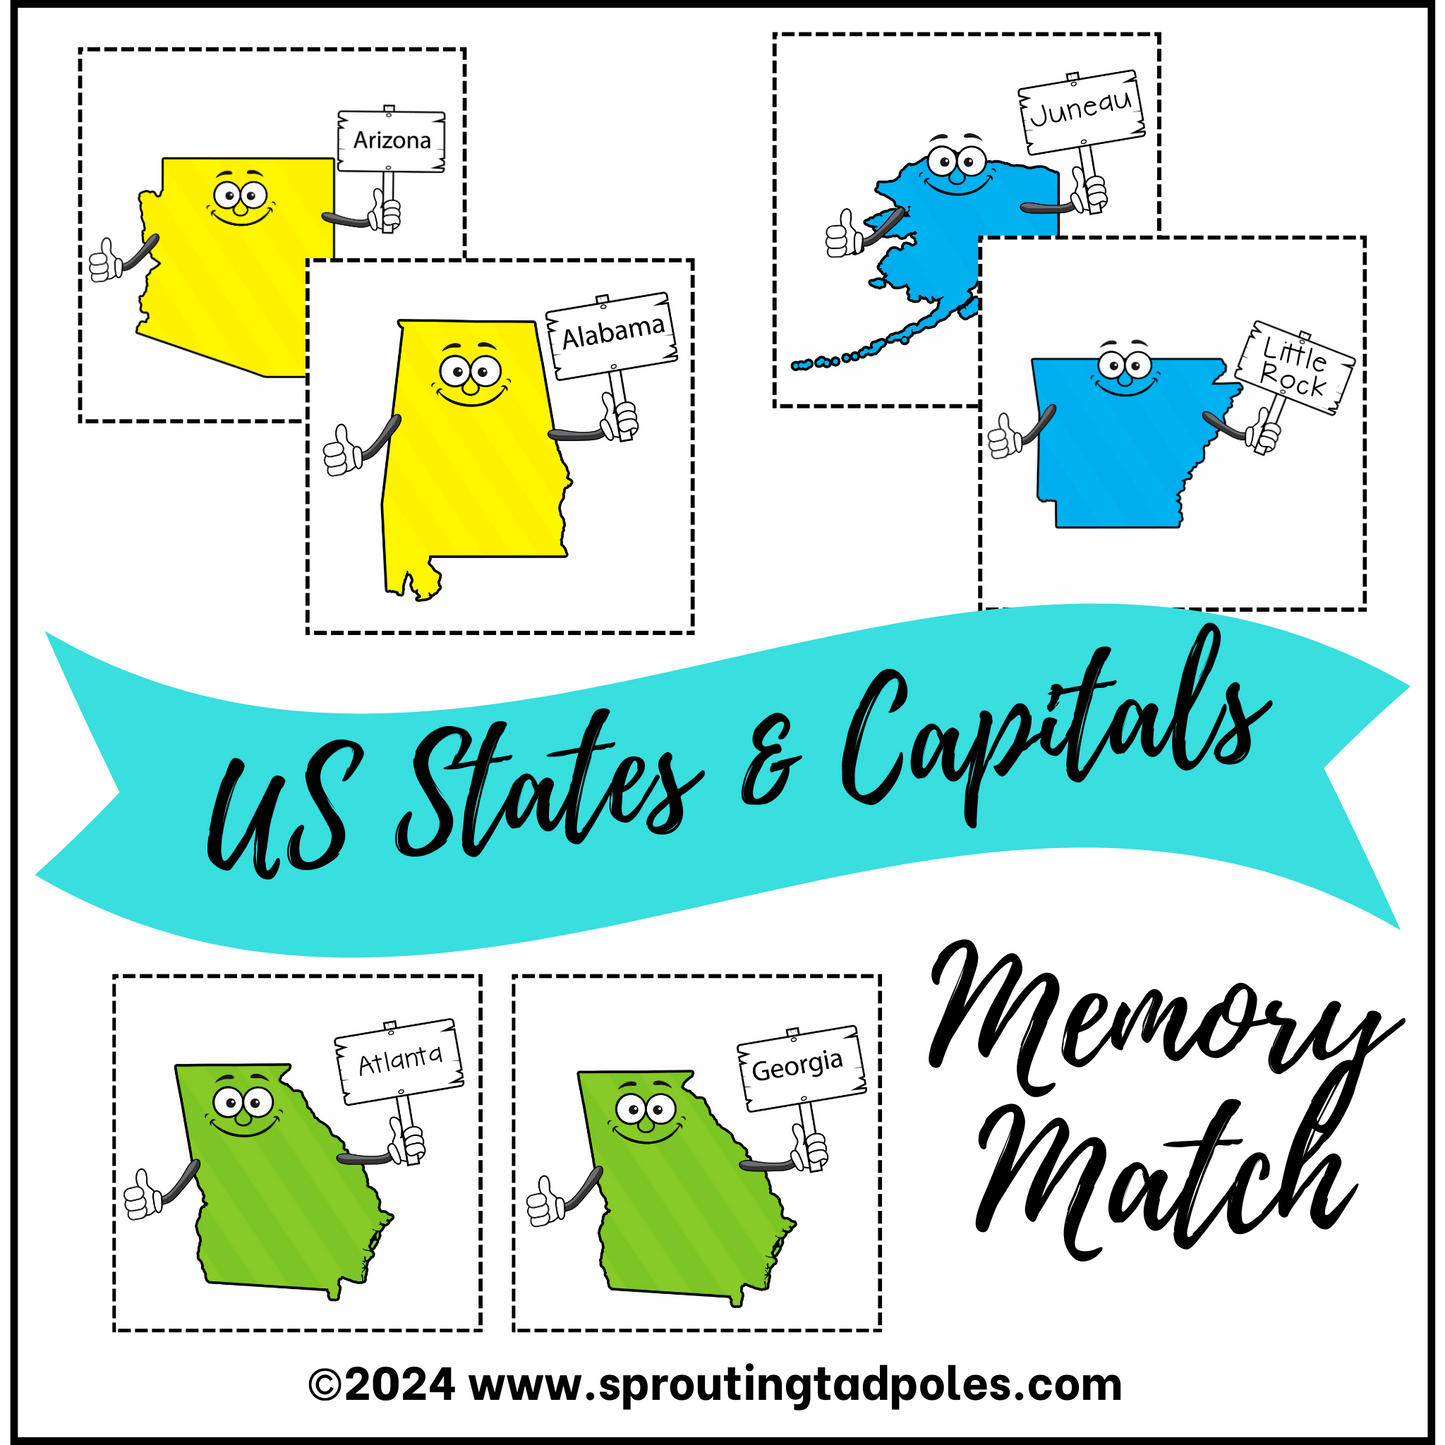 USA States & Capitals Memory Match Game